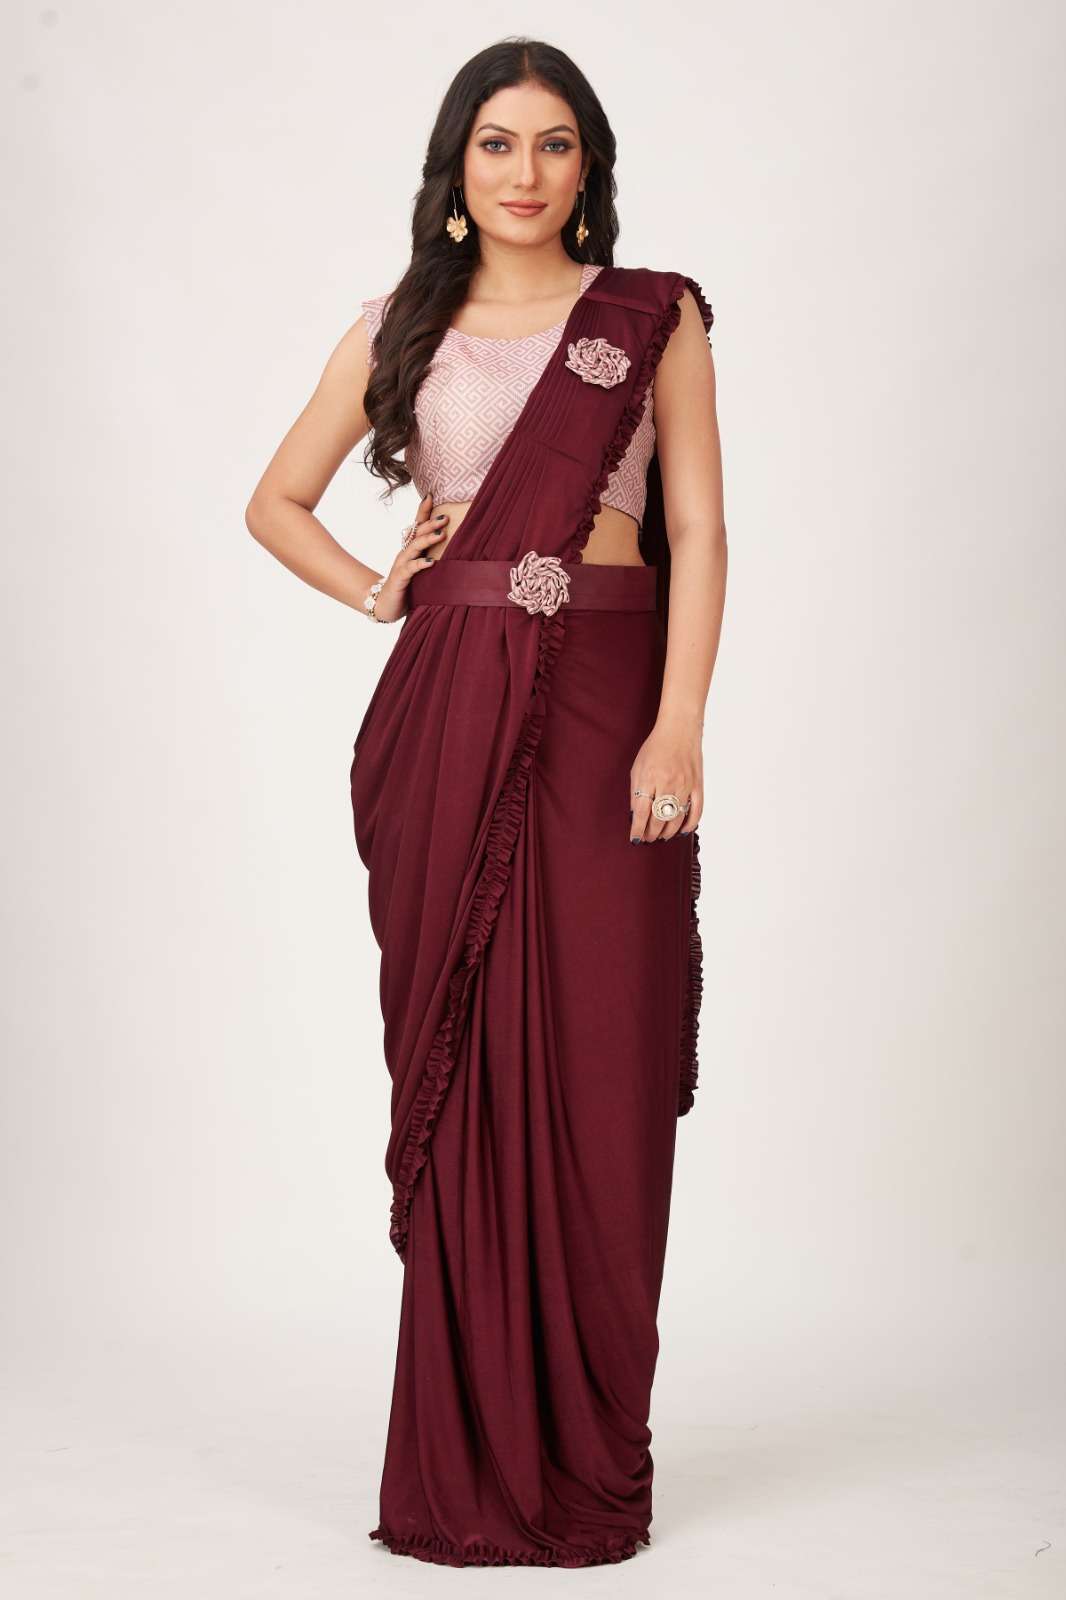 9 Stylish Plain Saree Looks To Inspire You | Designer saree blouse  patterns, Saree blouse designs latest, Saree look